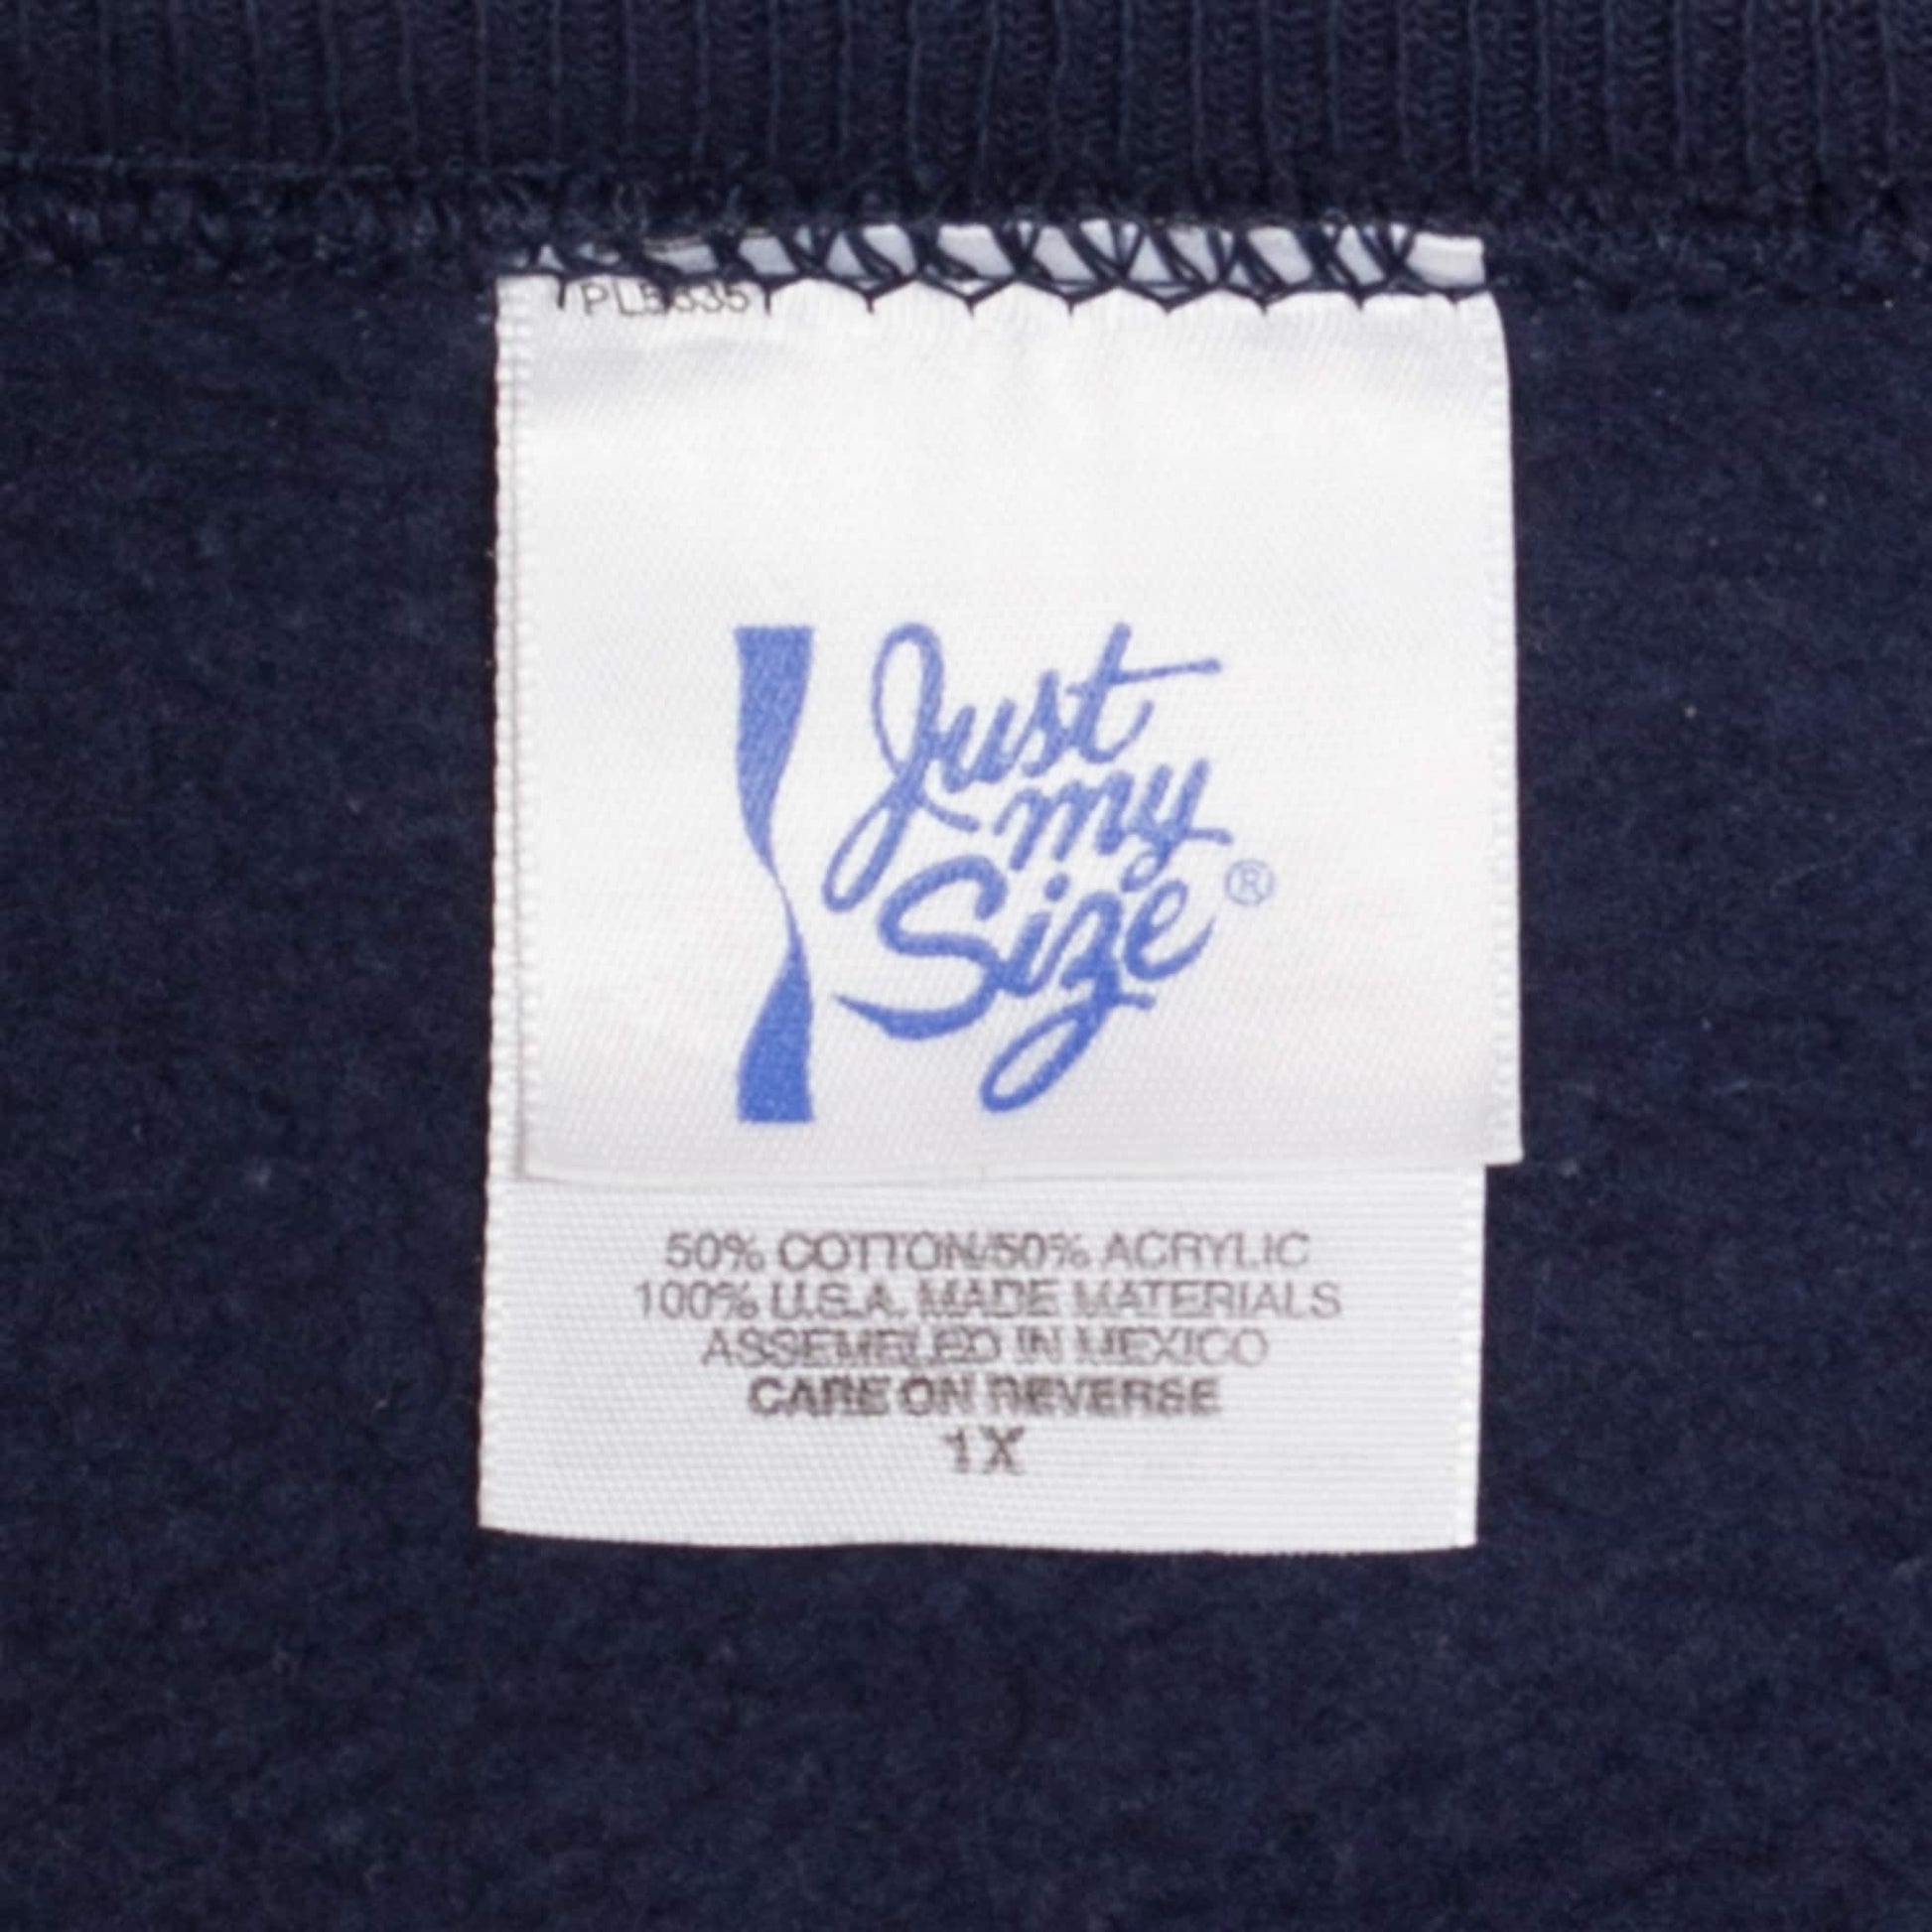 1X 90s Navy Blue Soft Raglan Sweatshirt | Vintage Slouchy Plain Crewneck Pullover